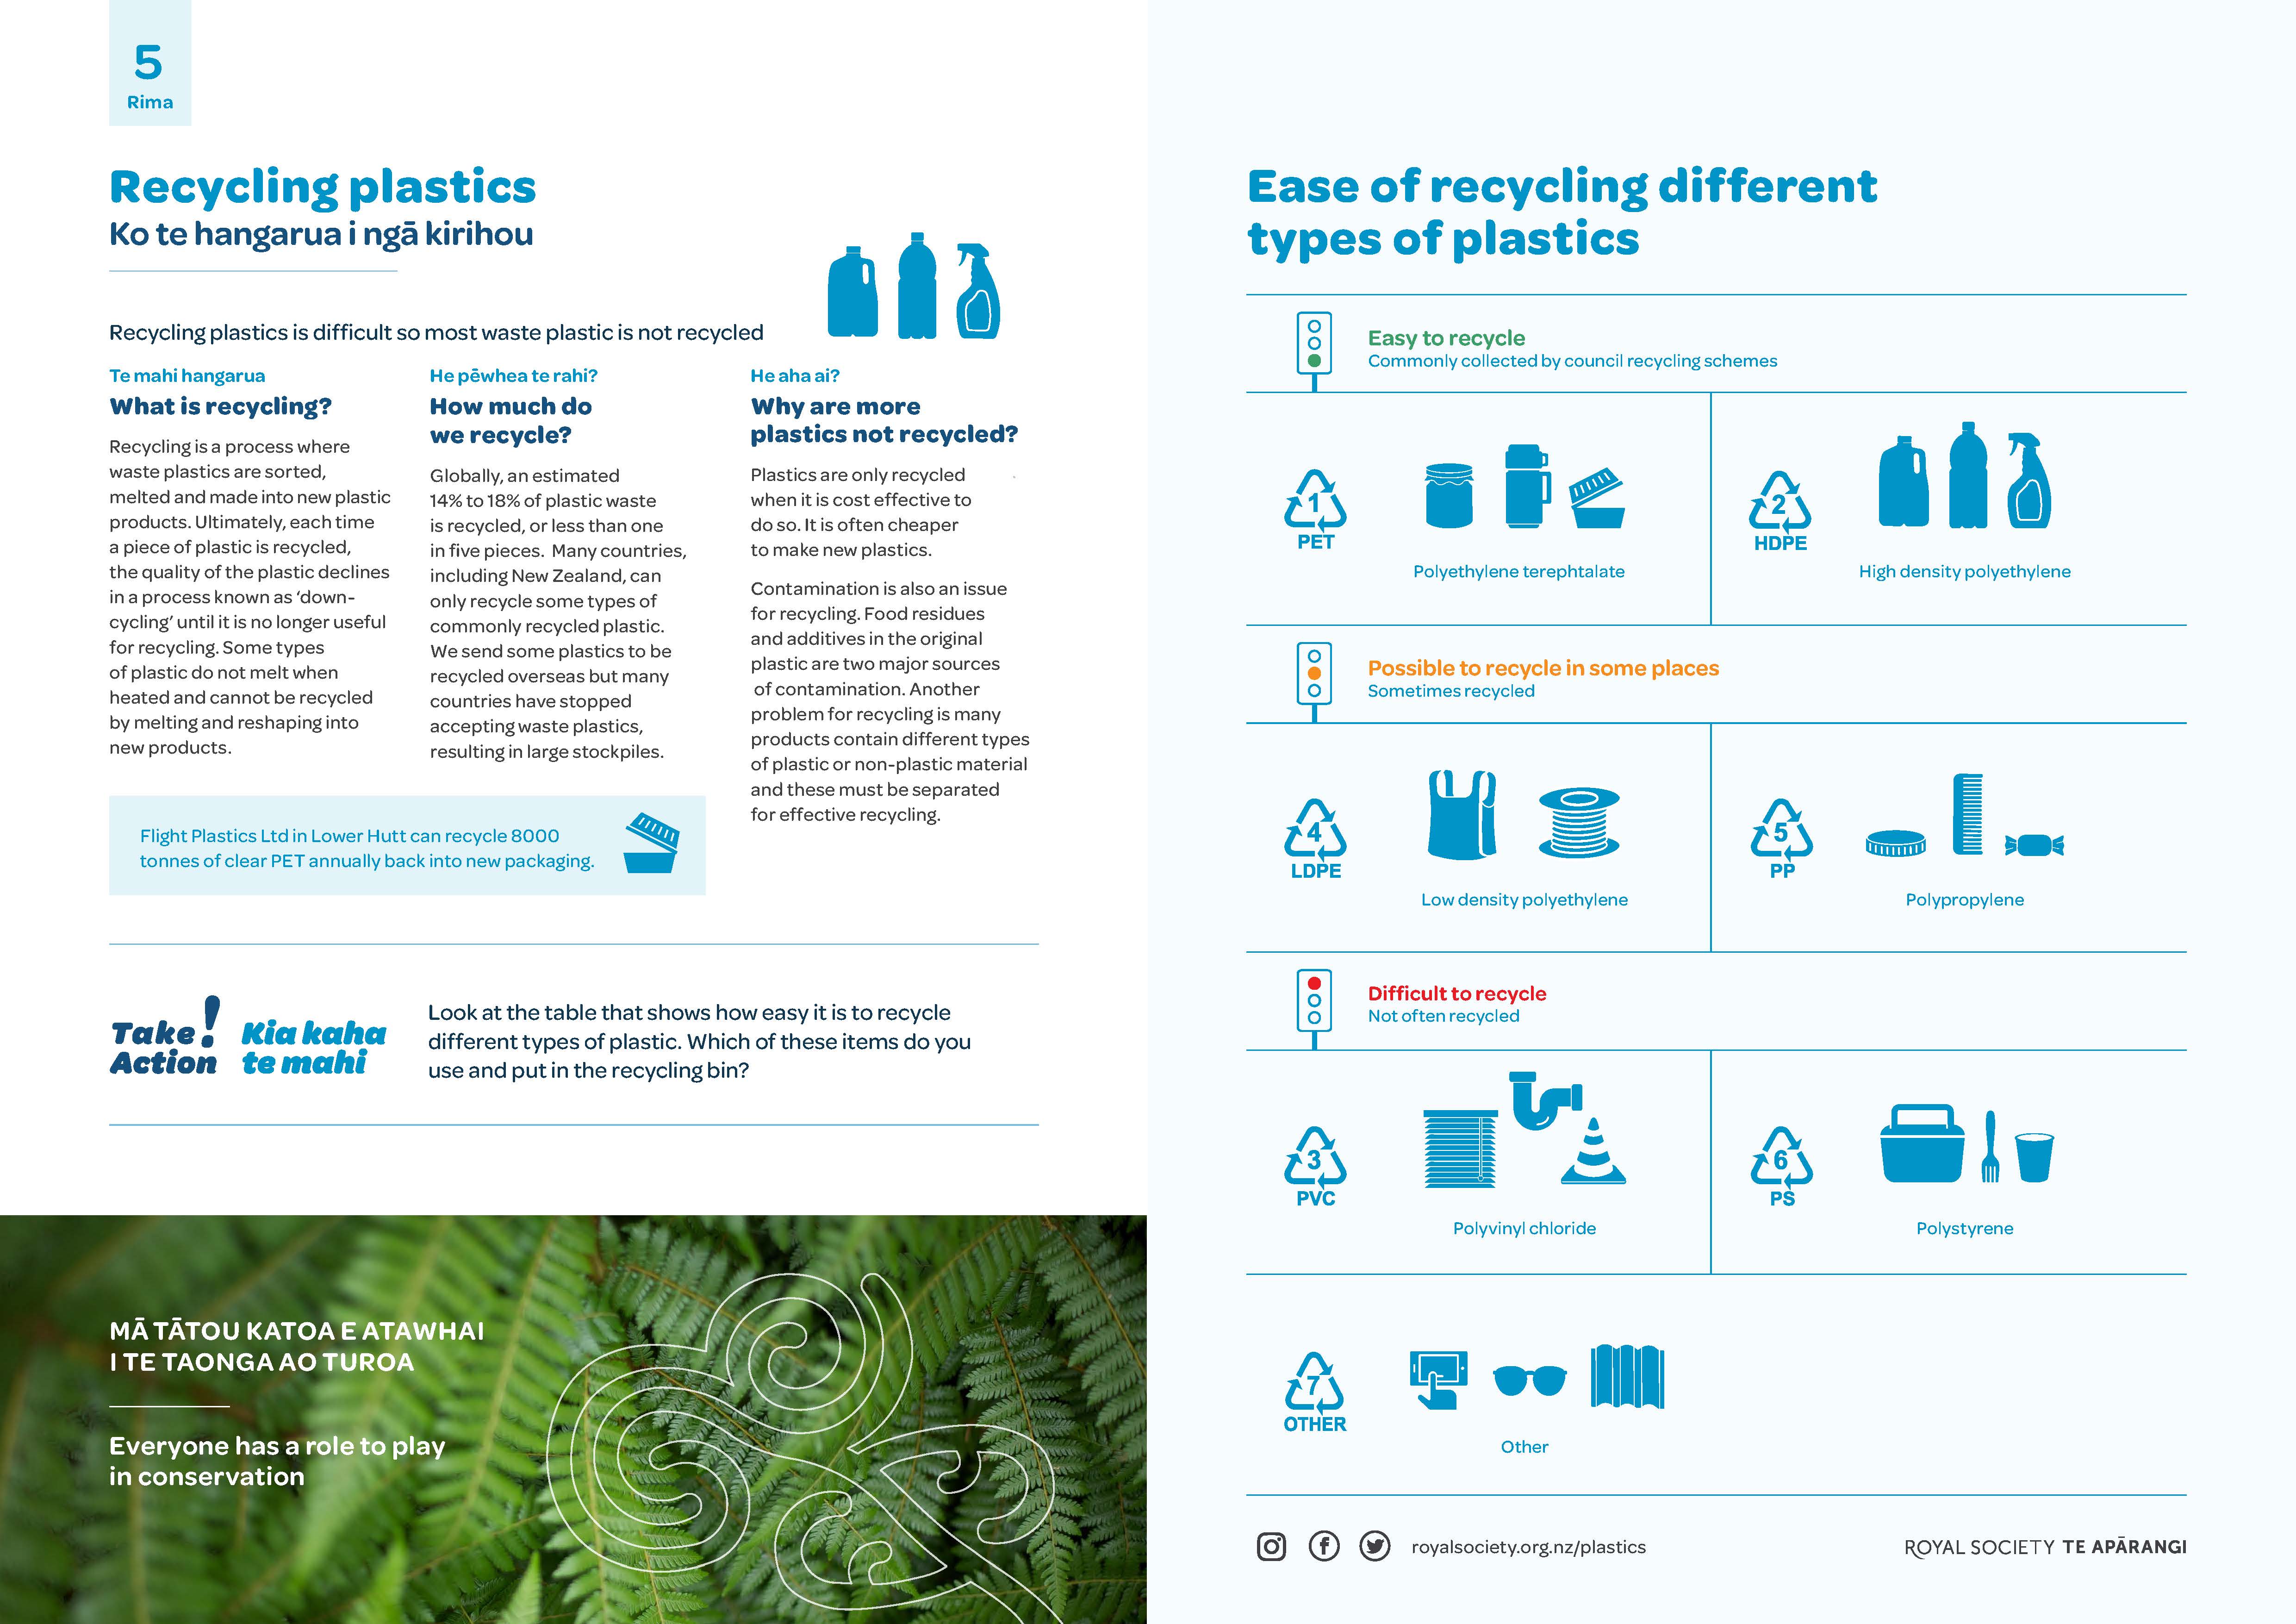 5 Rima Recycling plastics factsheet A3 image